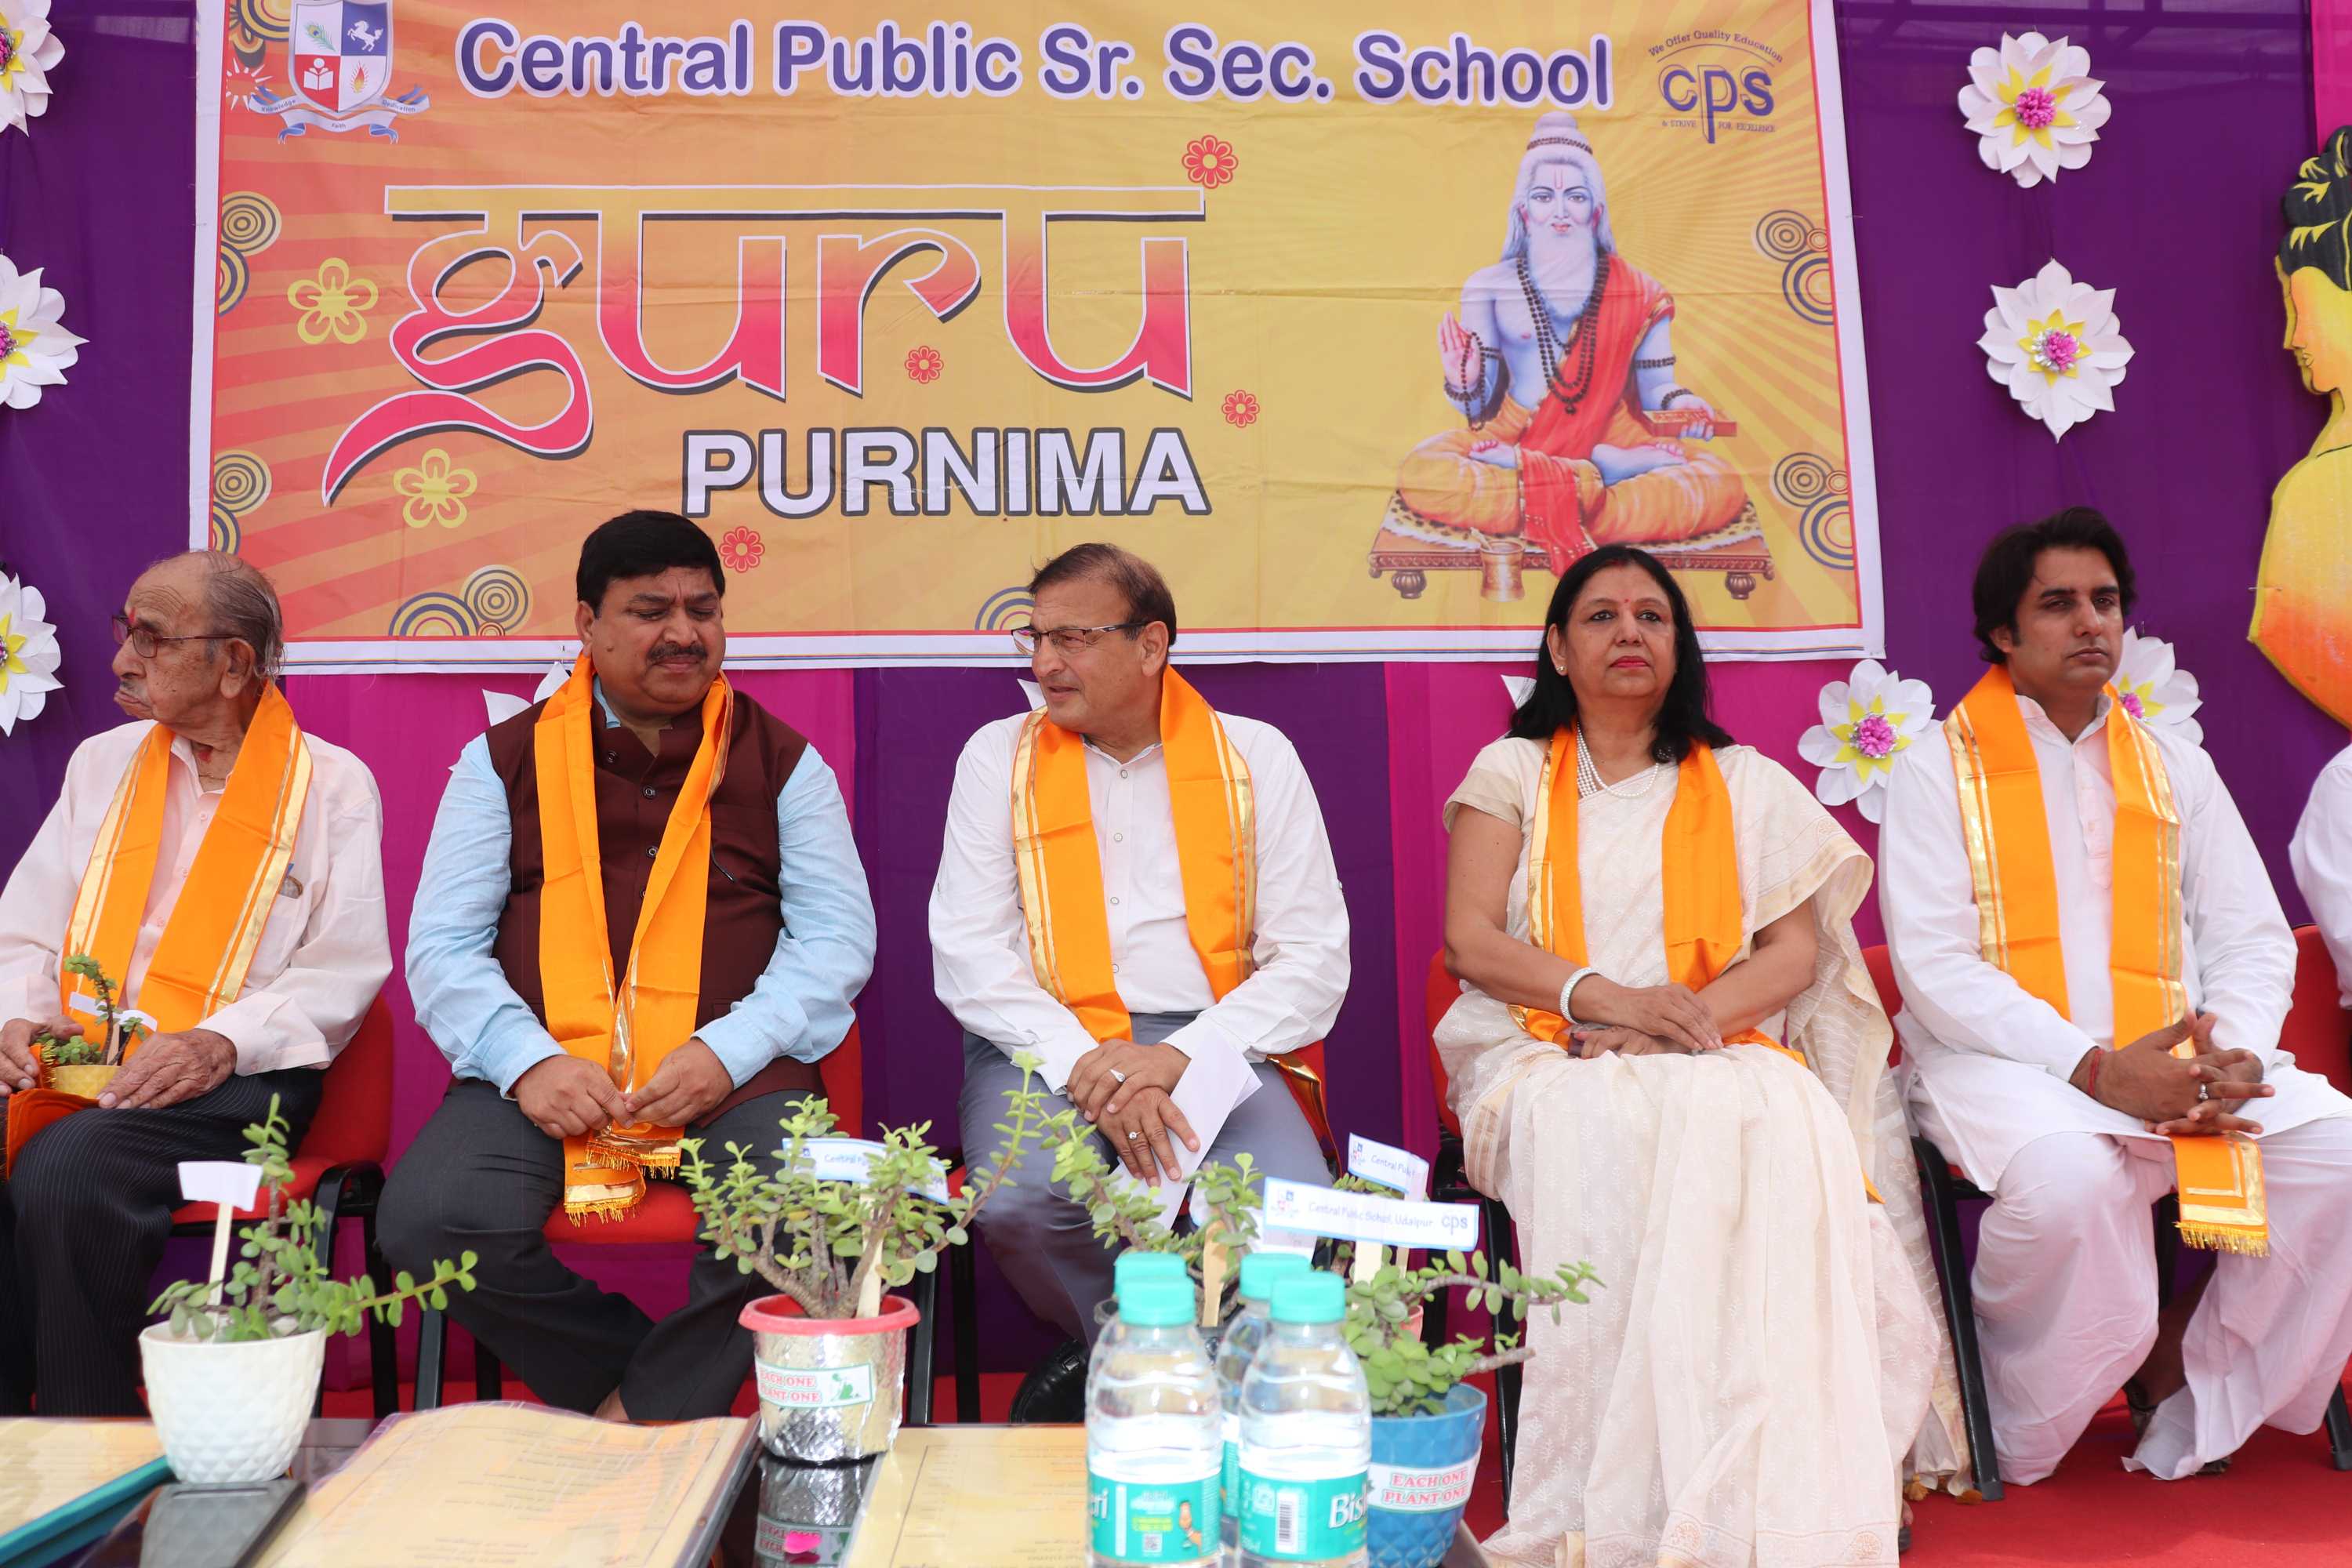 C.P.S. Guru Purnima festival celebrated in school with reverence